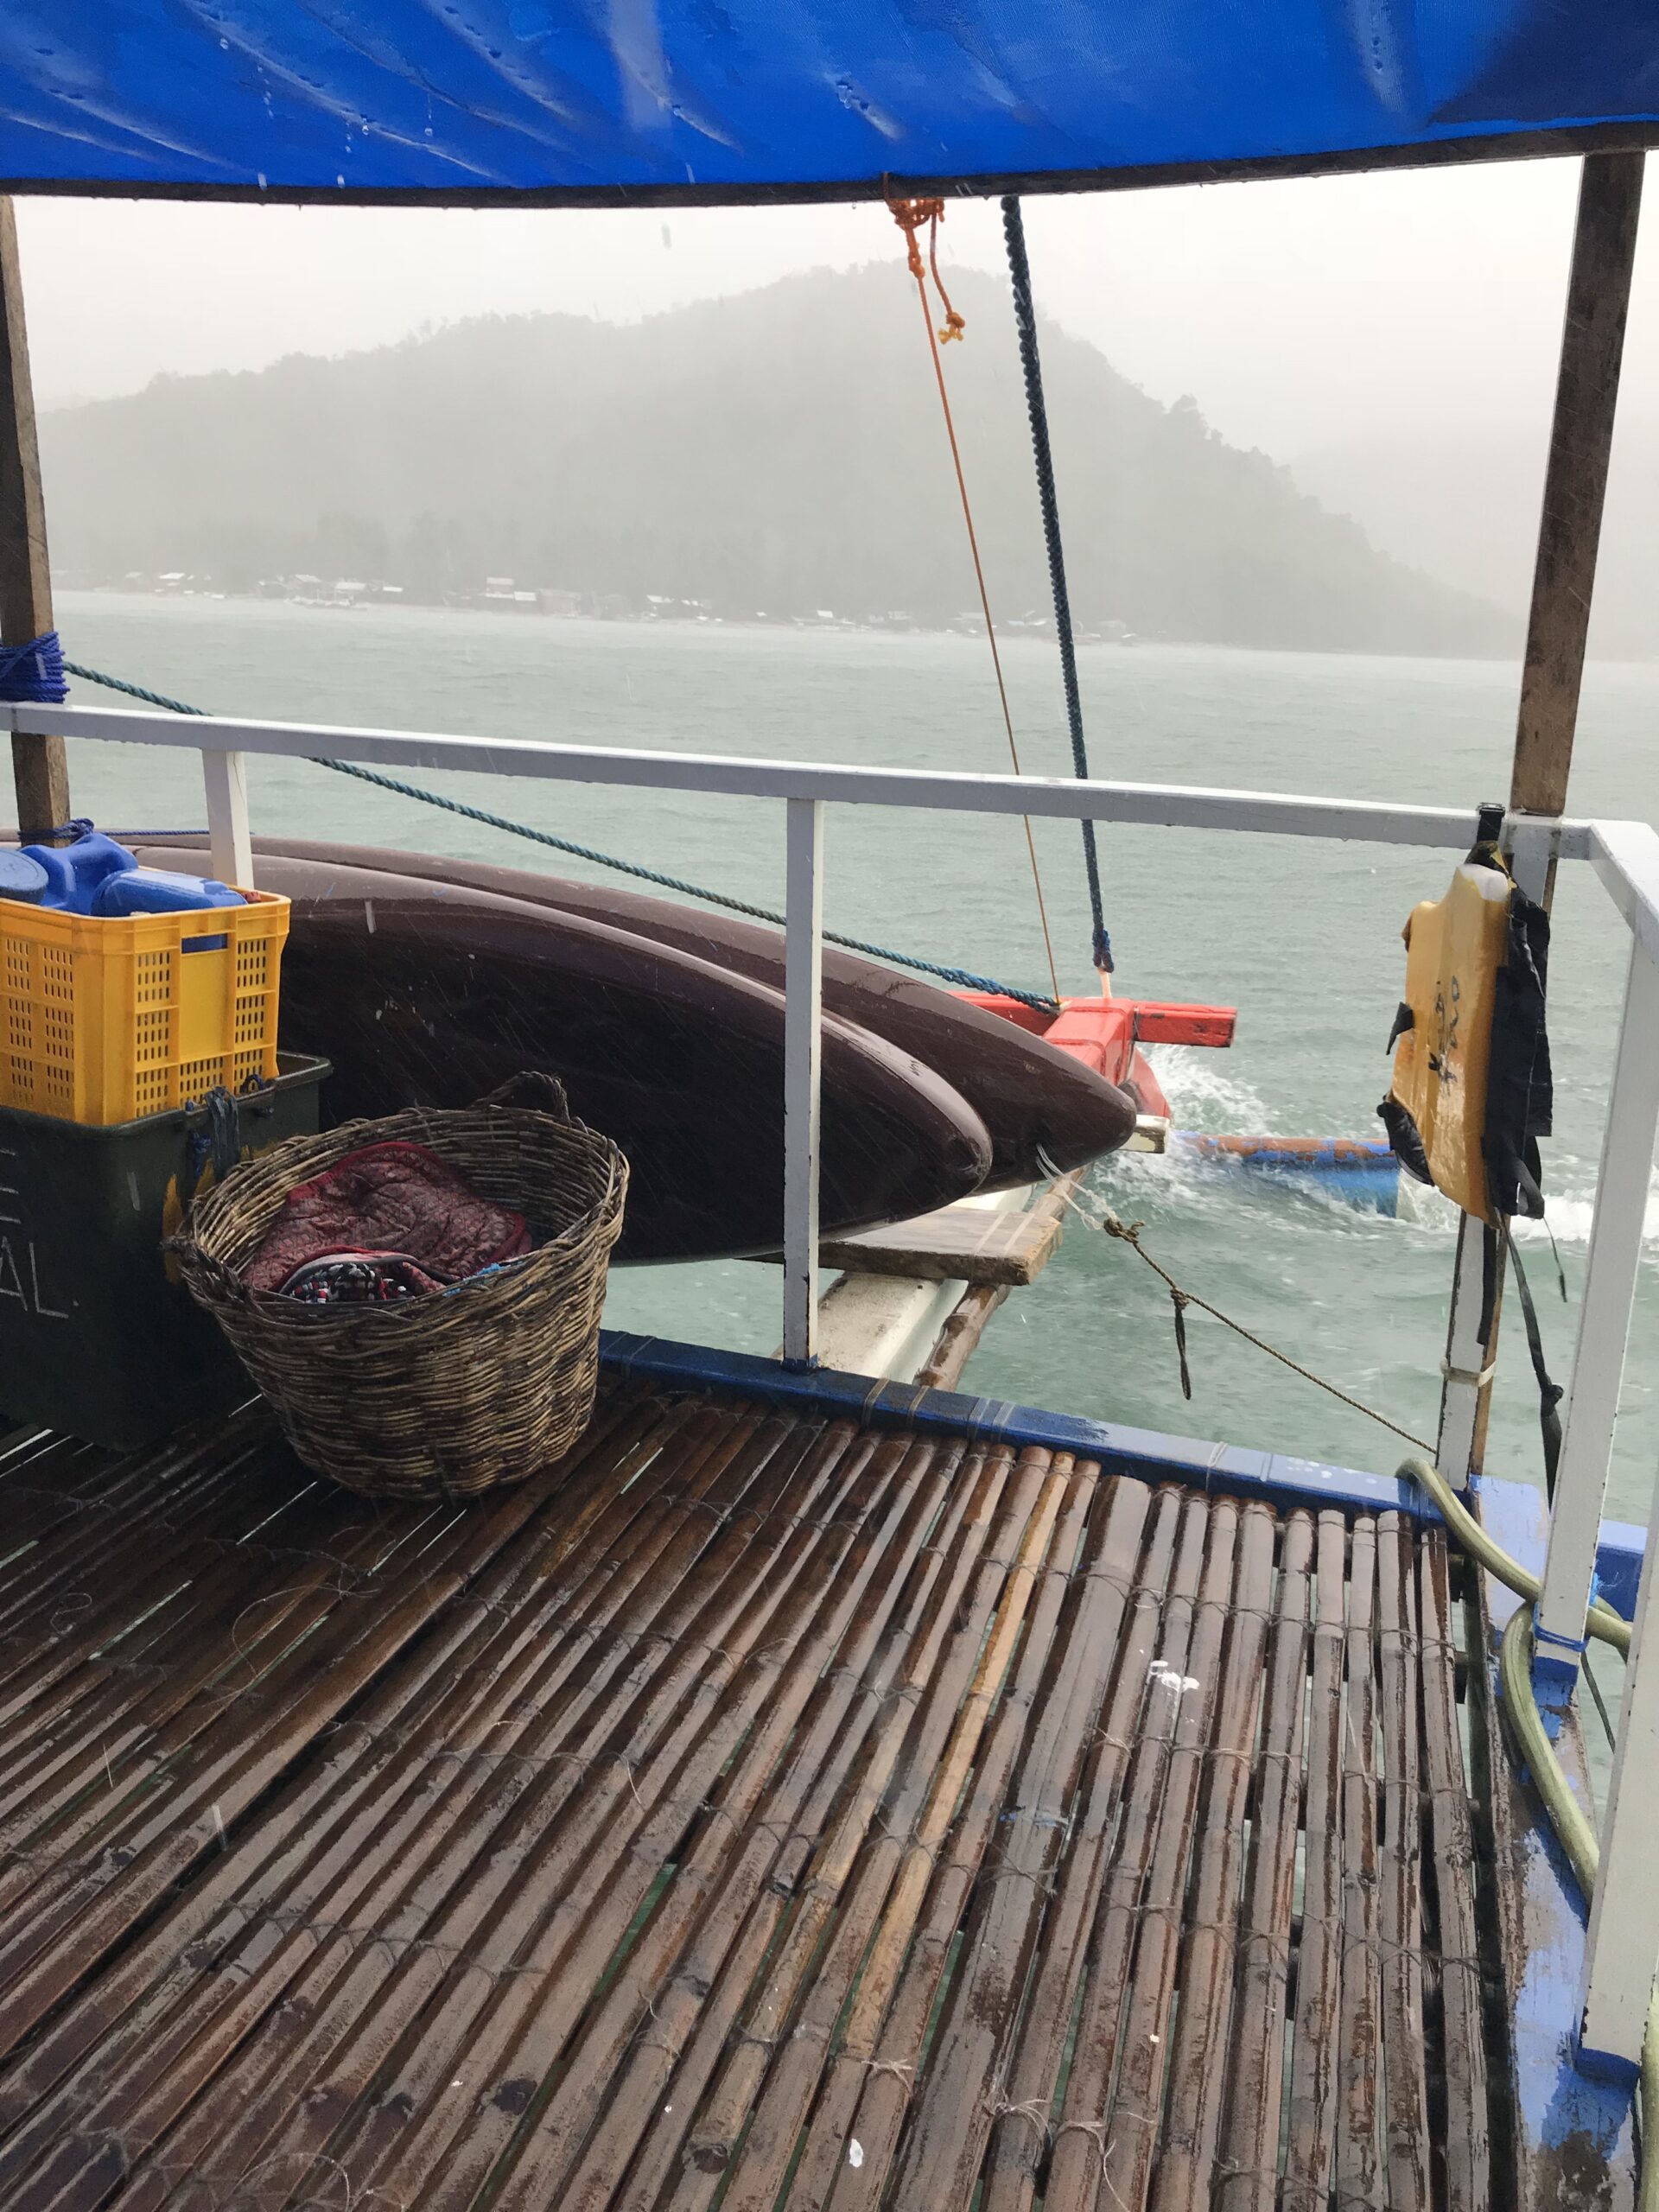 Rain storm on the boat